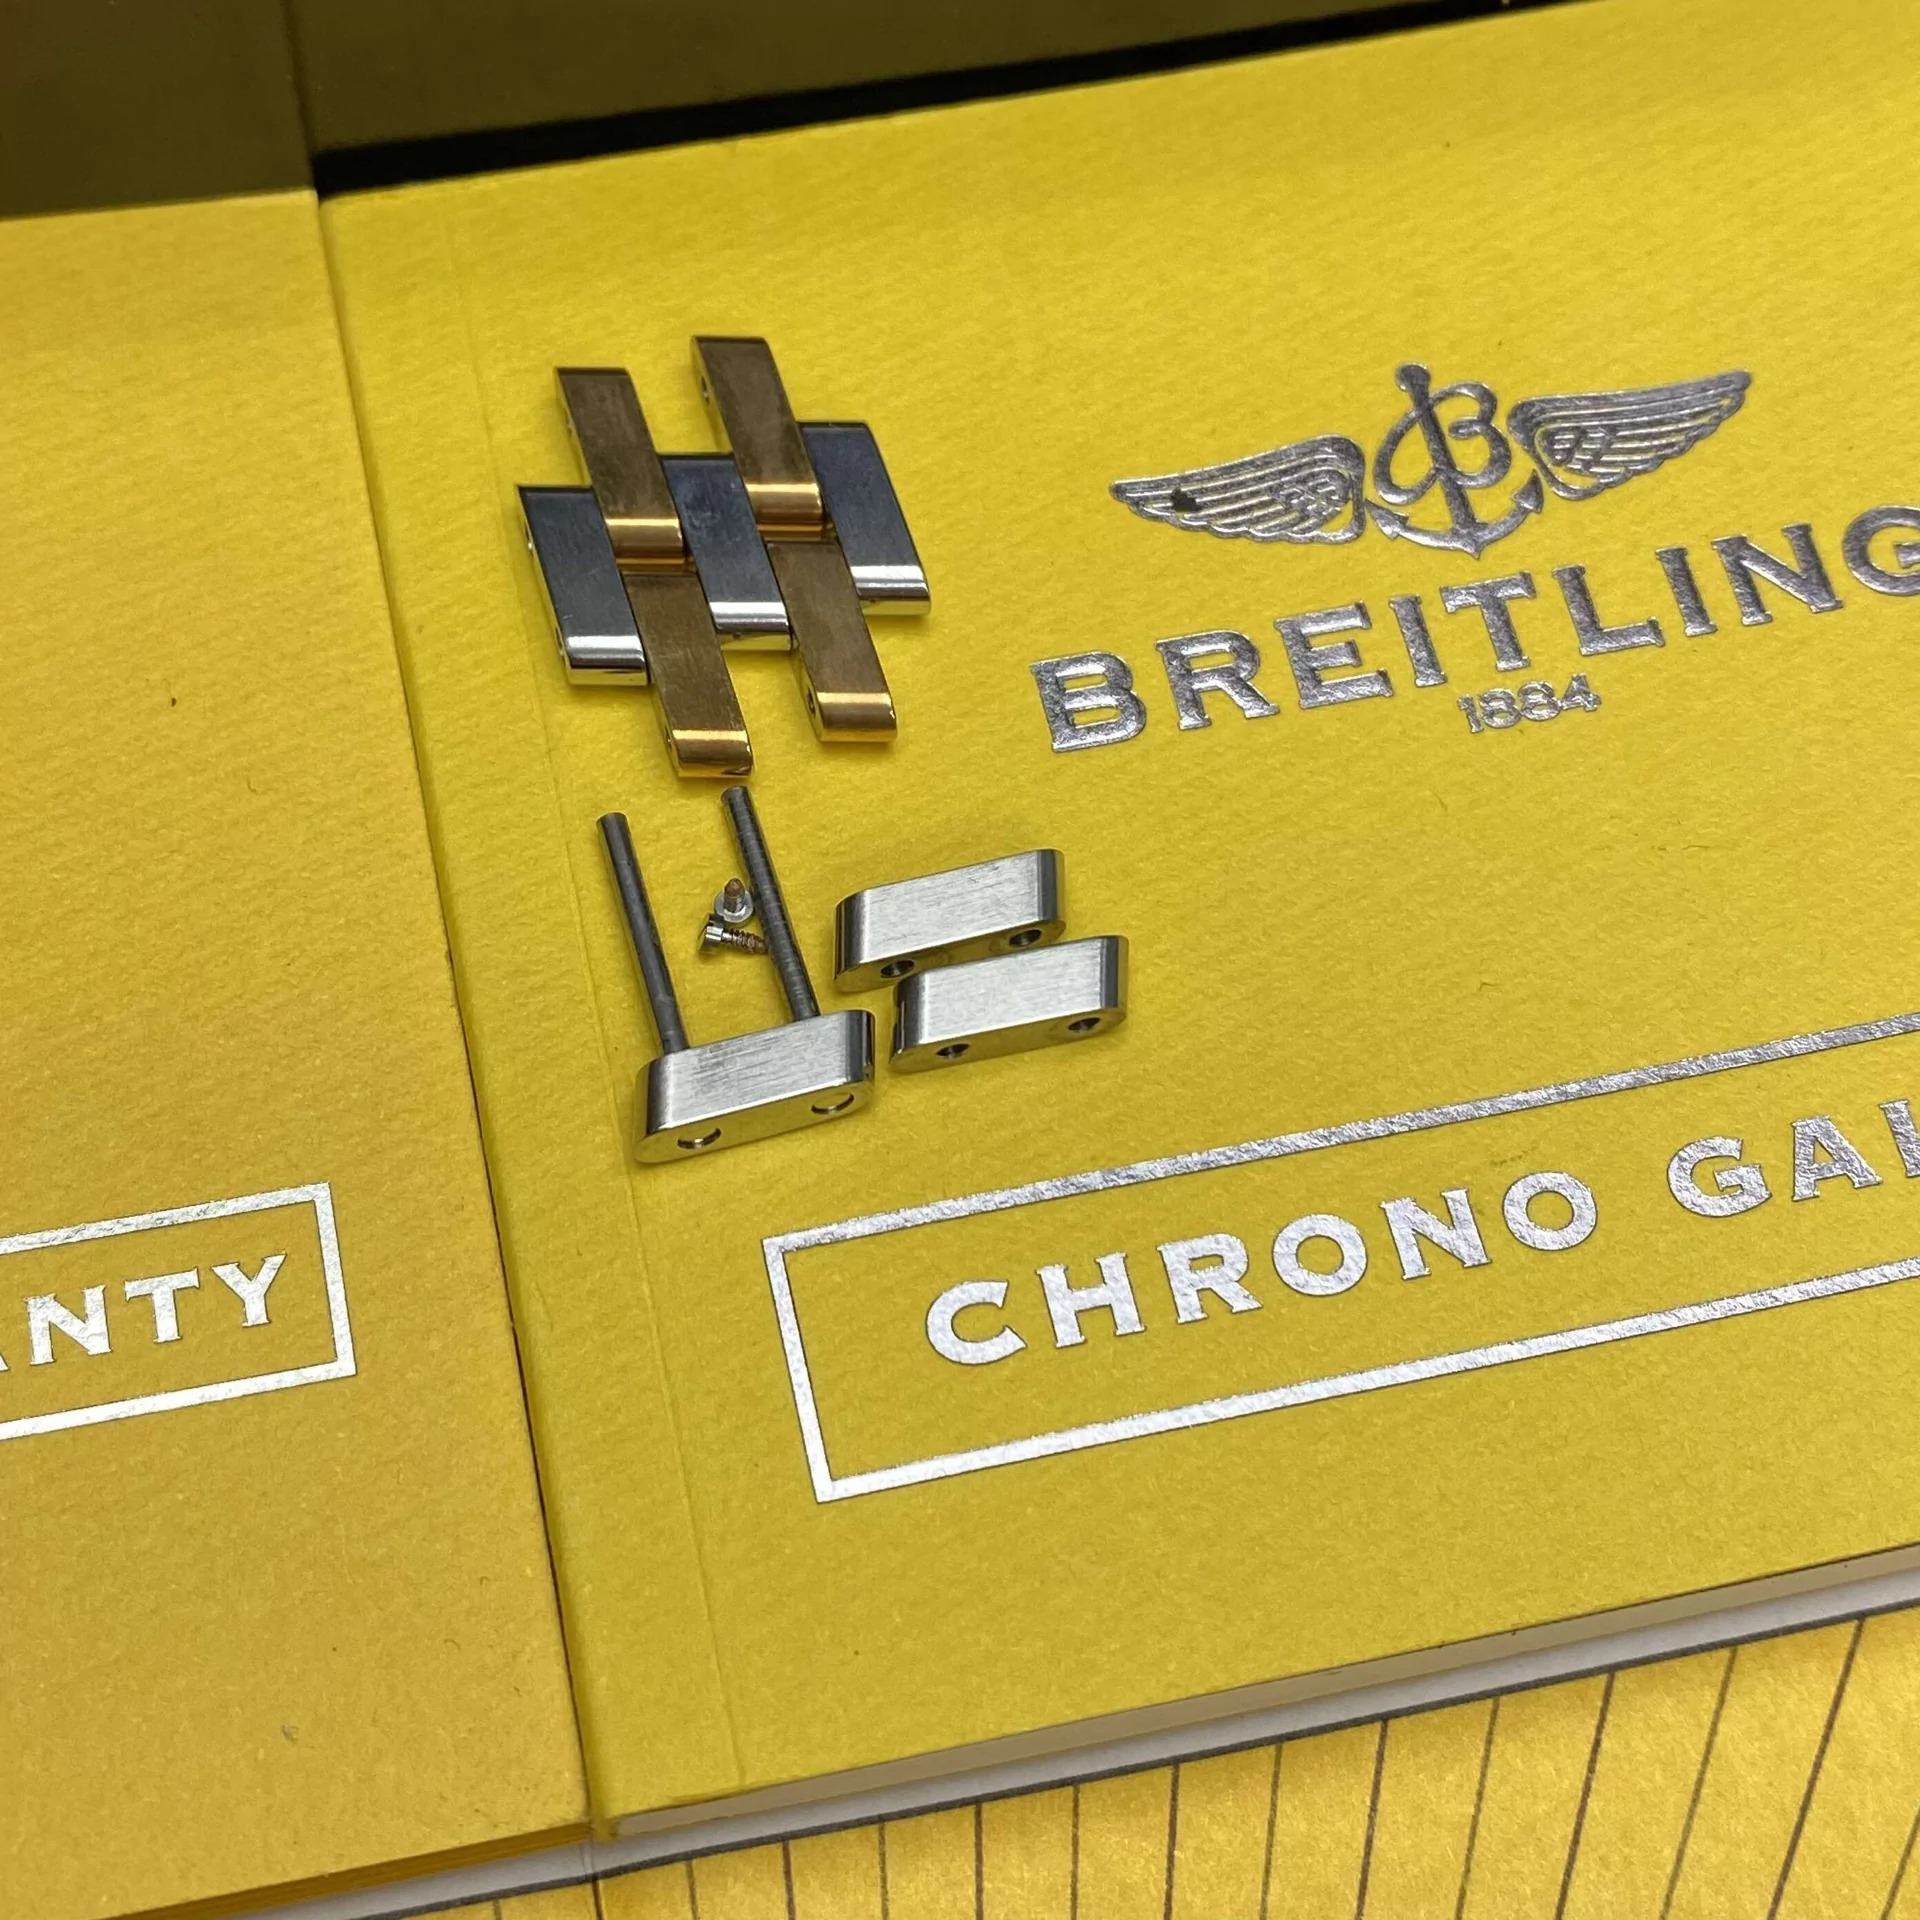 Relógio Breitling Chrono Galatic